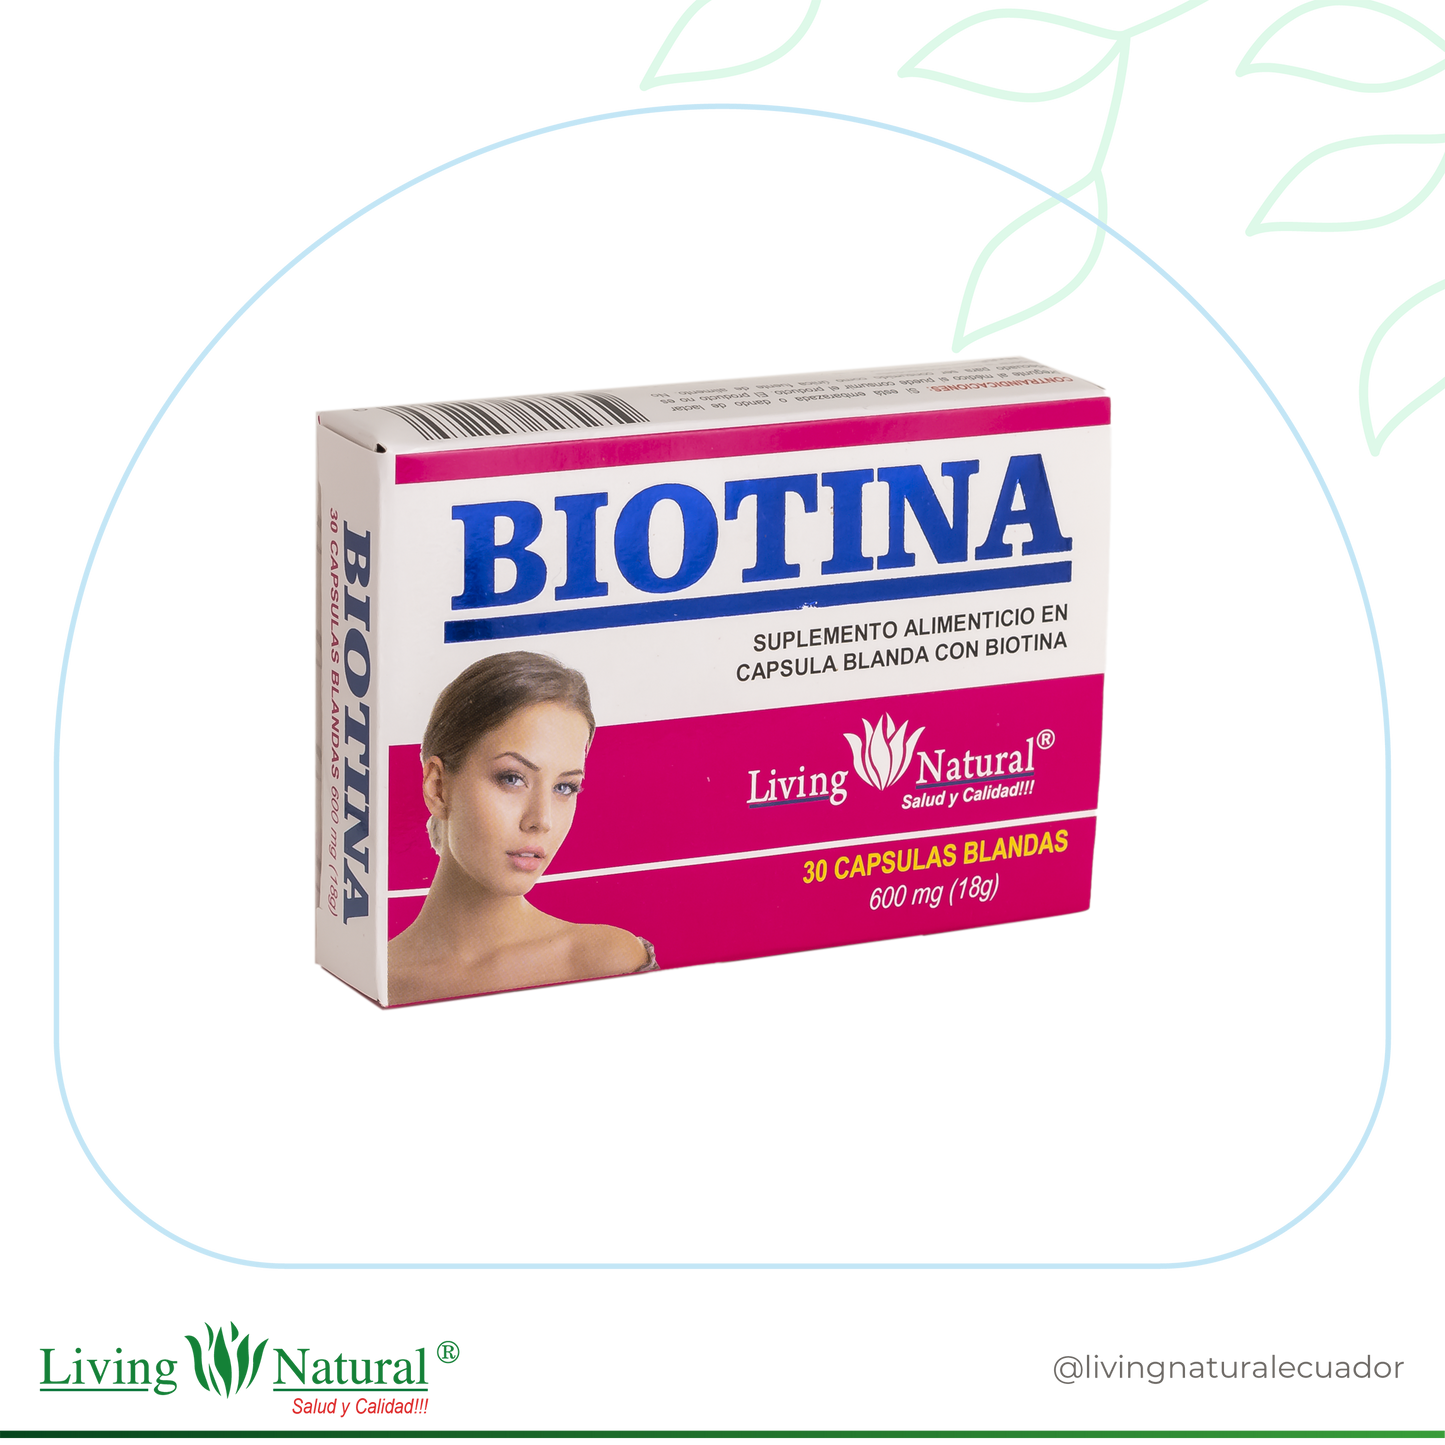 BIOTINA | 600 mg | X30, X60, X100